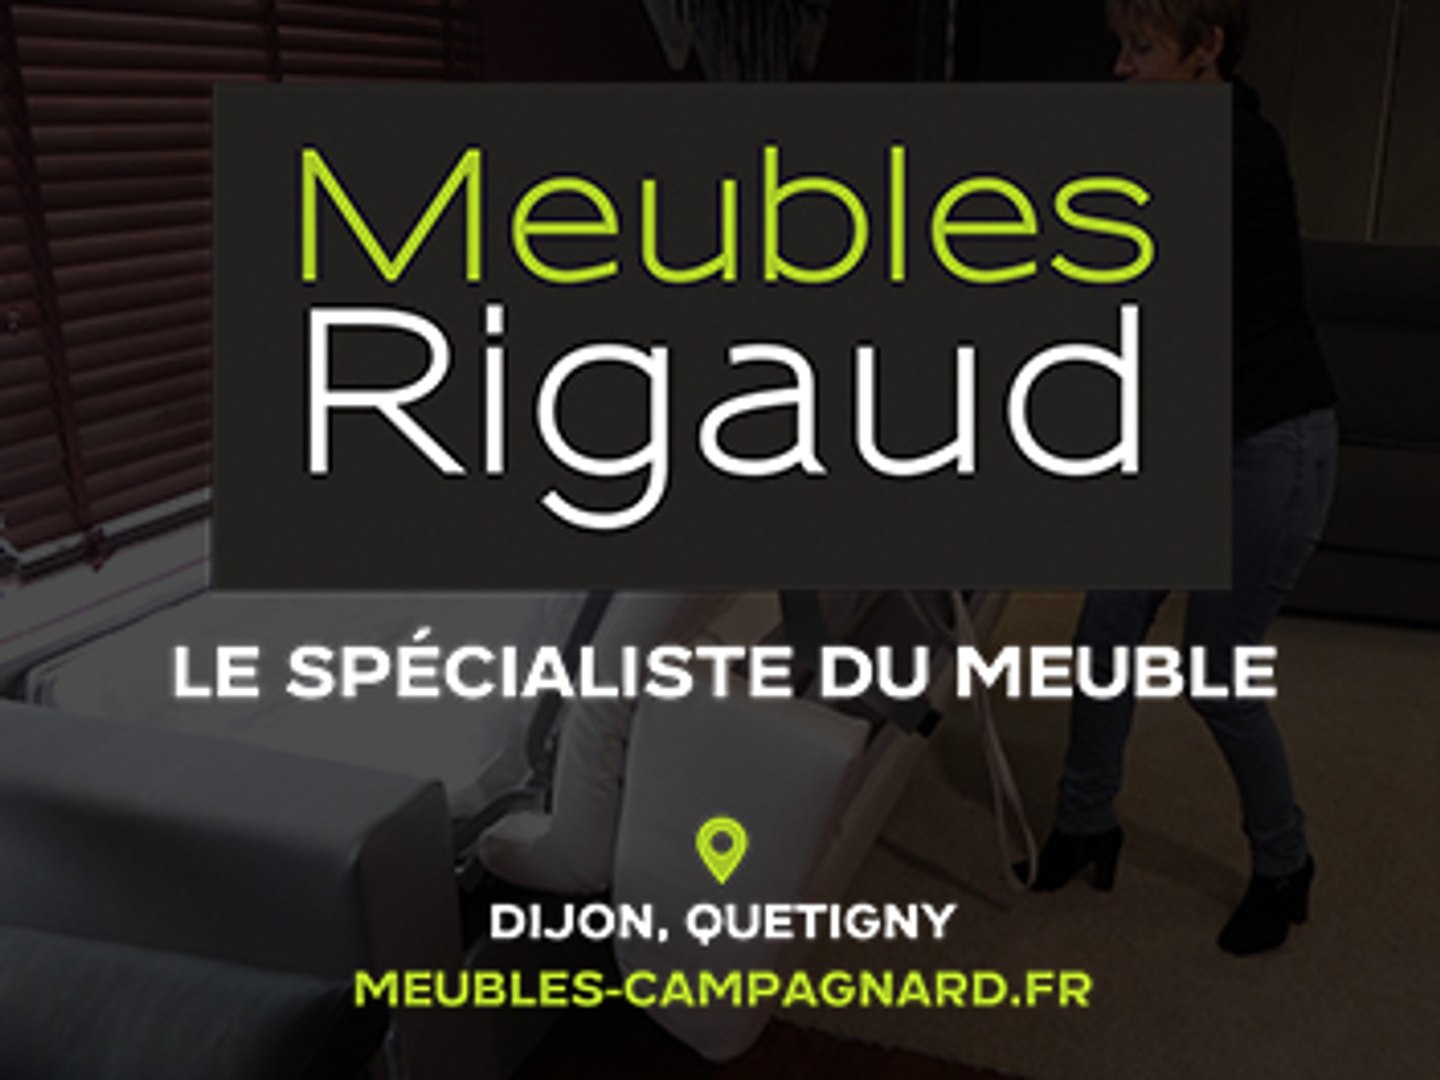 Meubles Rigaud - Le spécialiste du meuble à Dijon, Quetigny. - Vidéo  Dailymotion